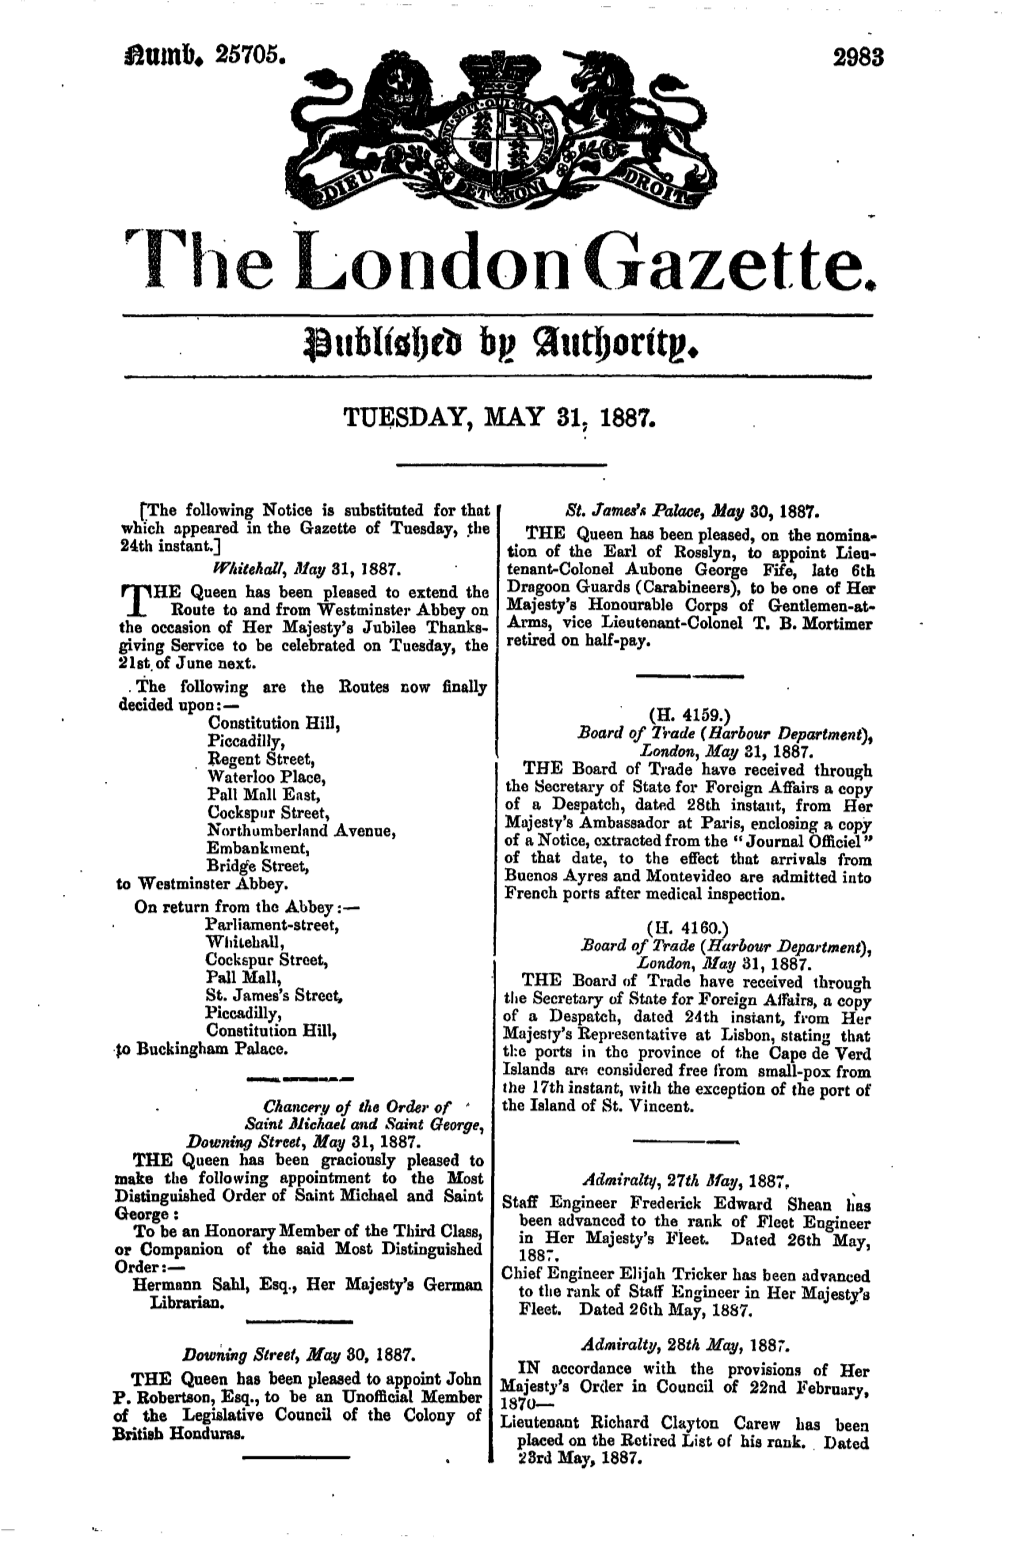 Le London Gazette